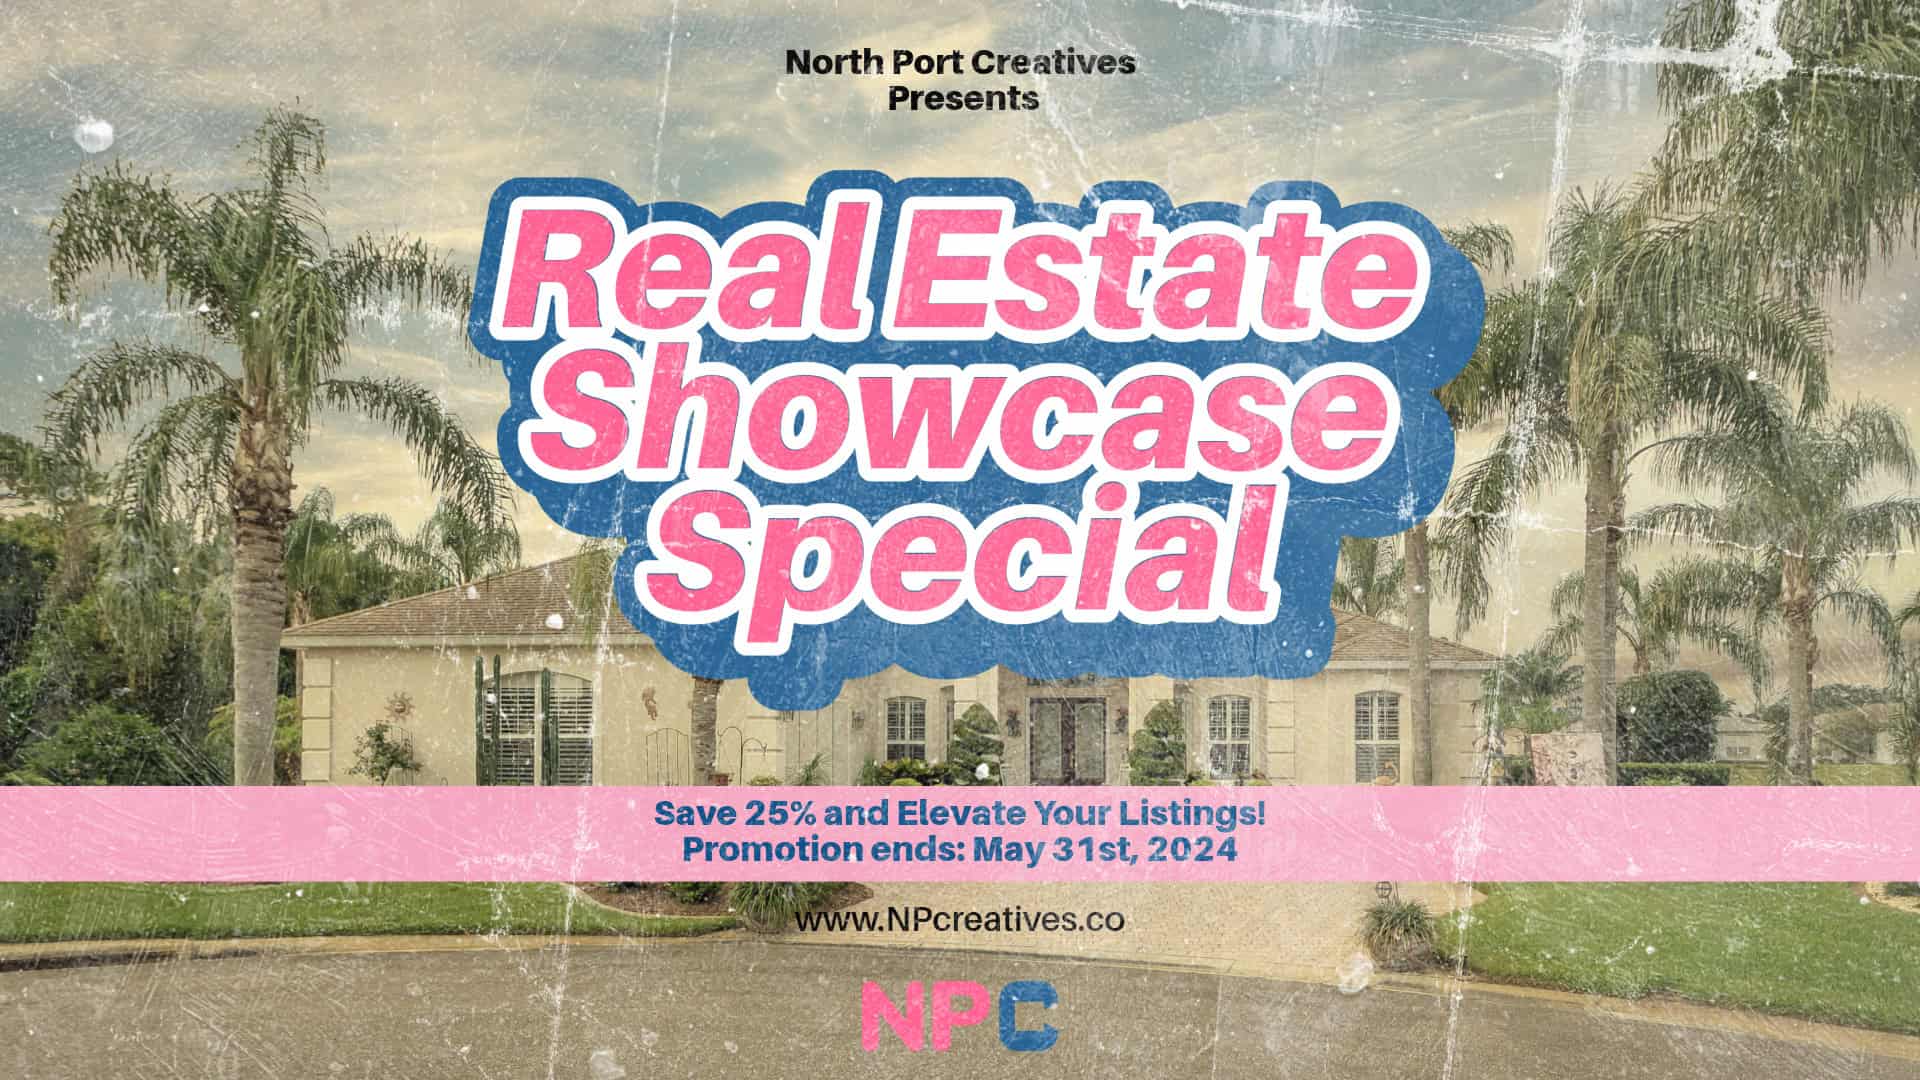 NPC’s Real Estate Showcase Special